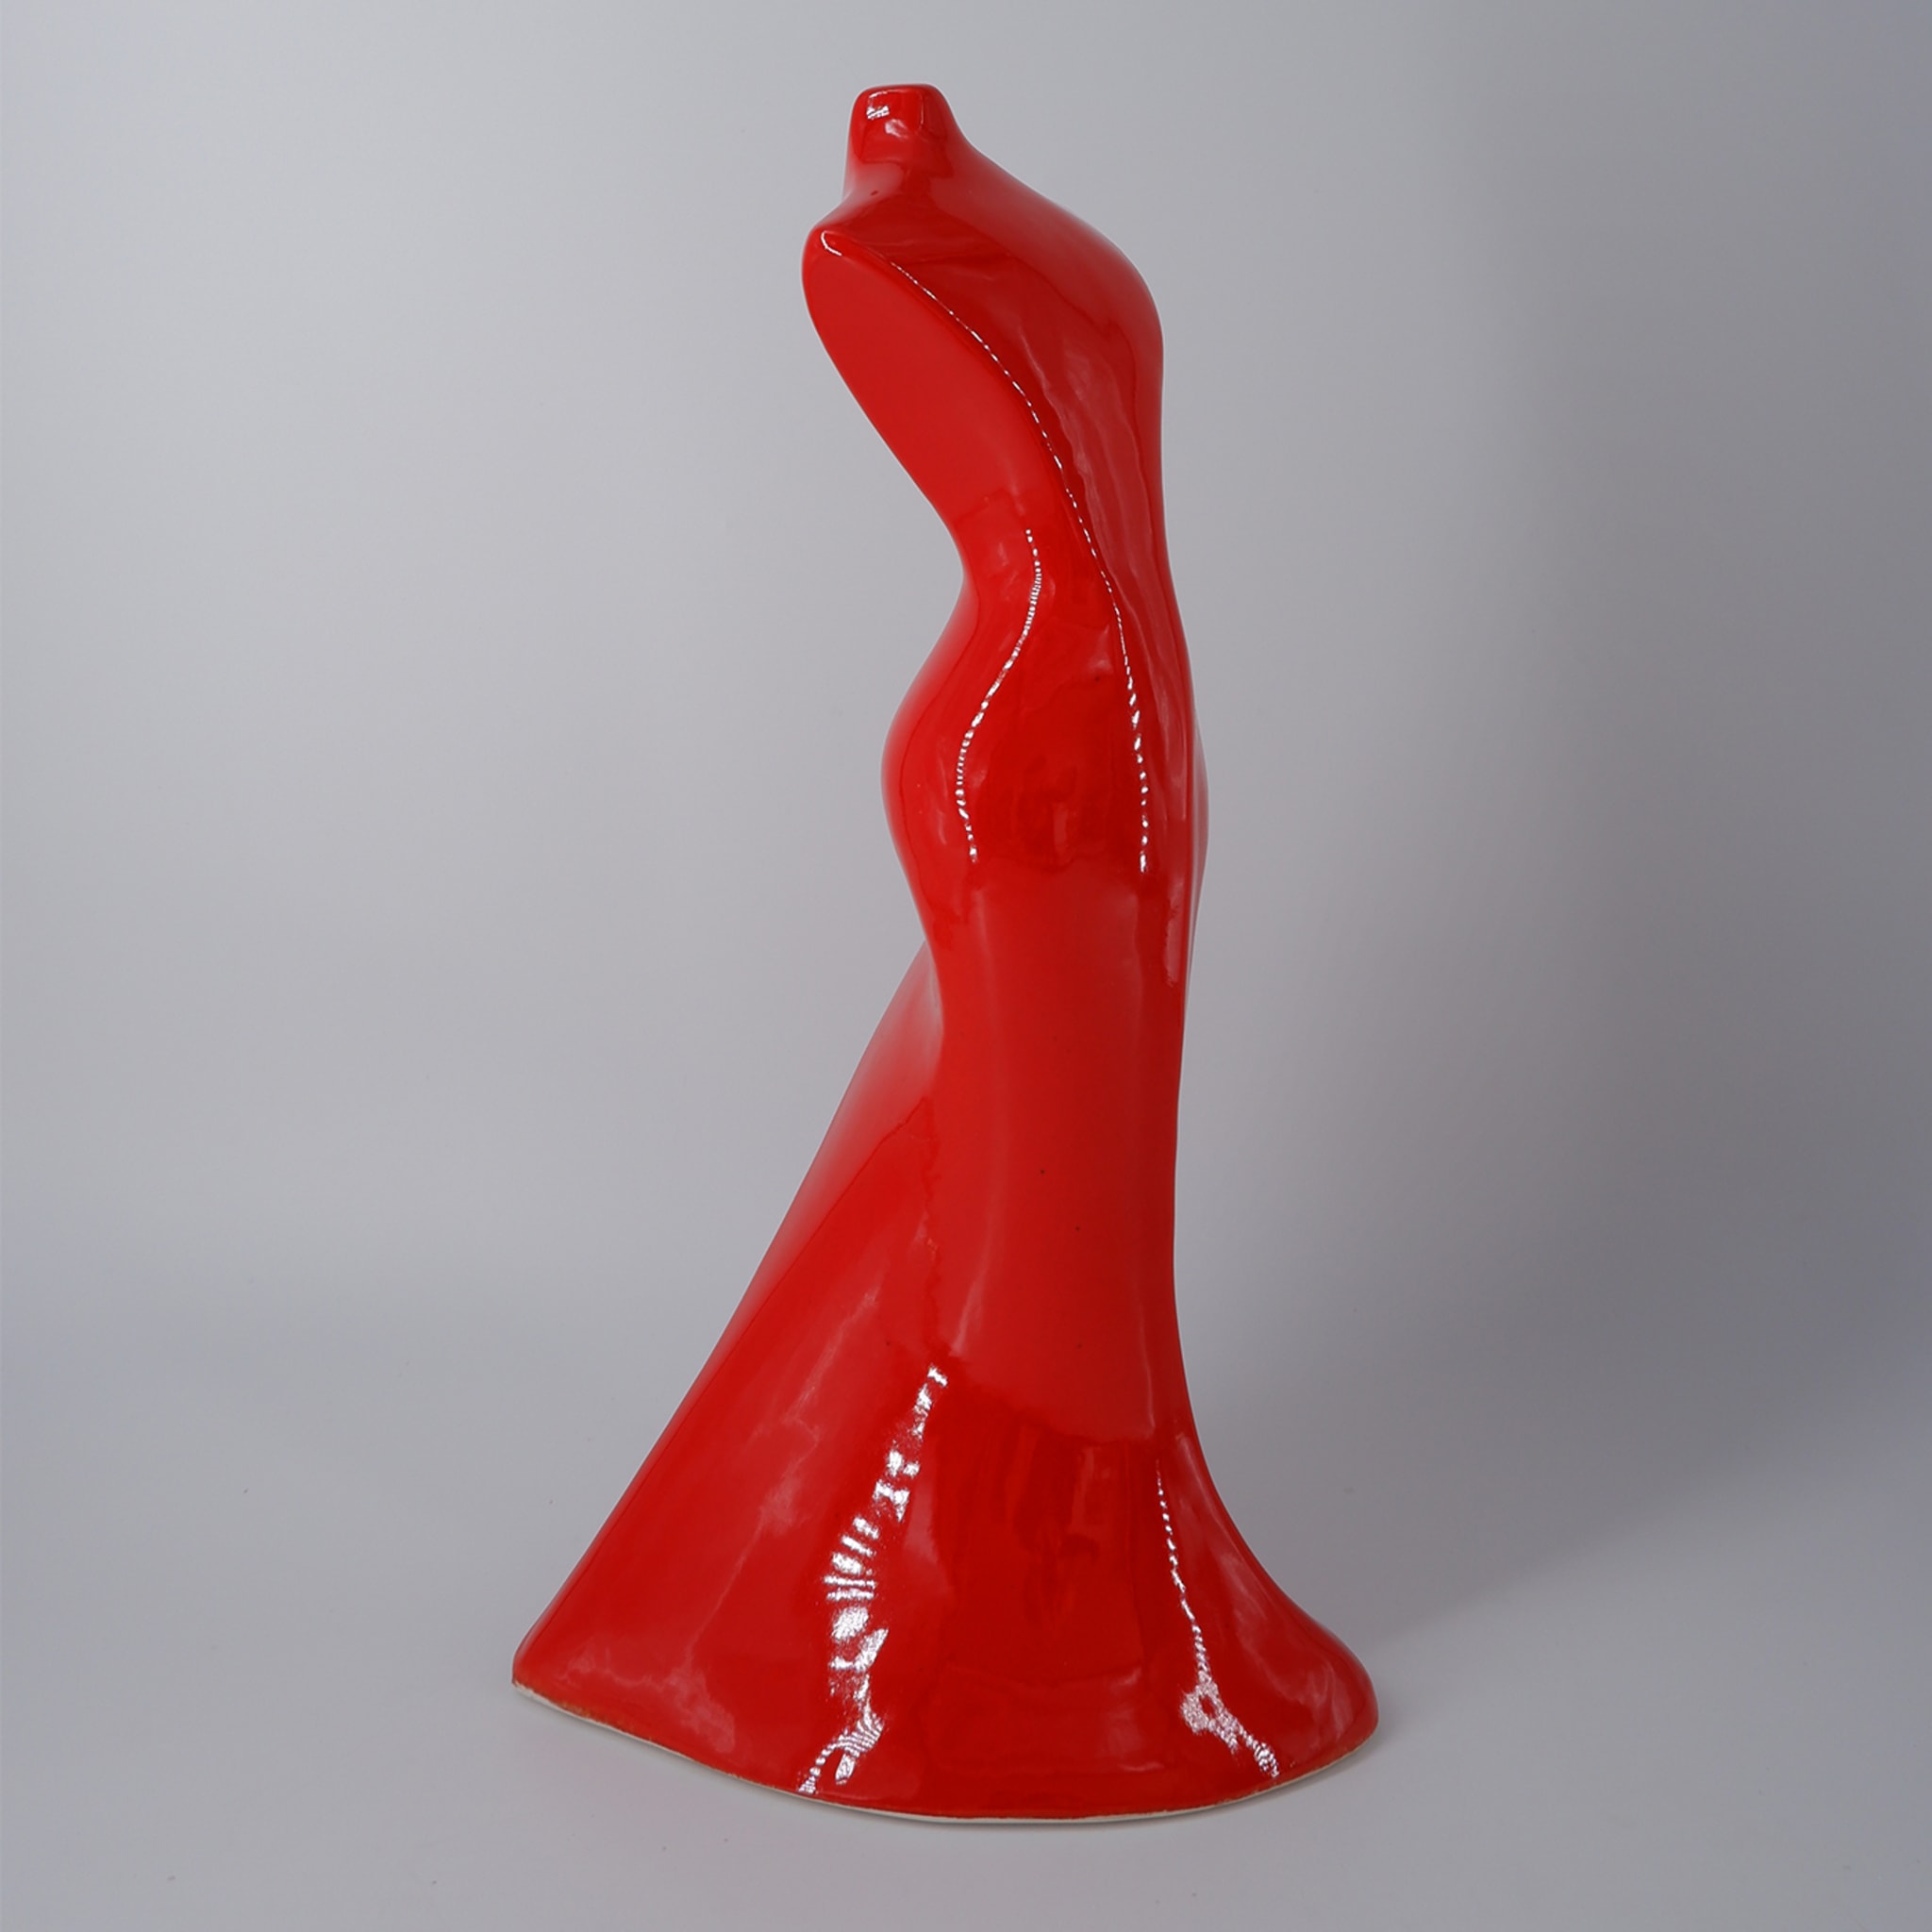 Greta Red Sculpture - Alternative view 1